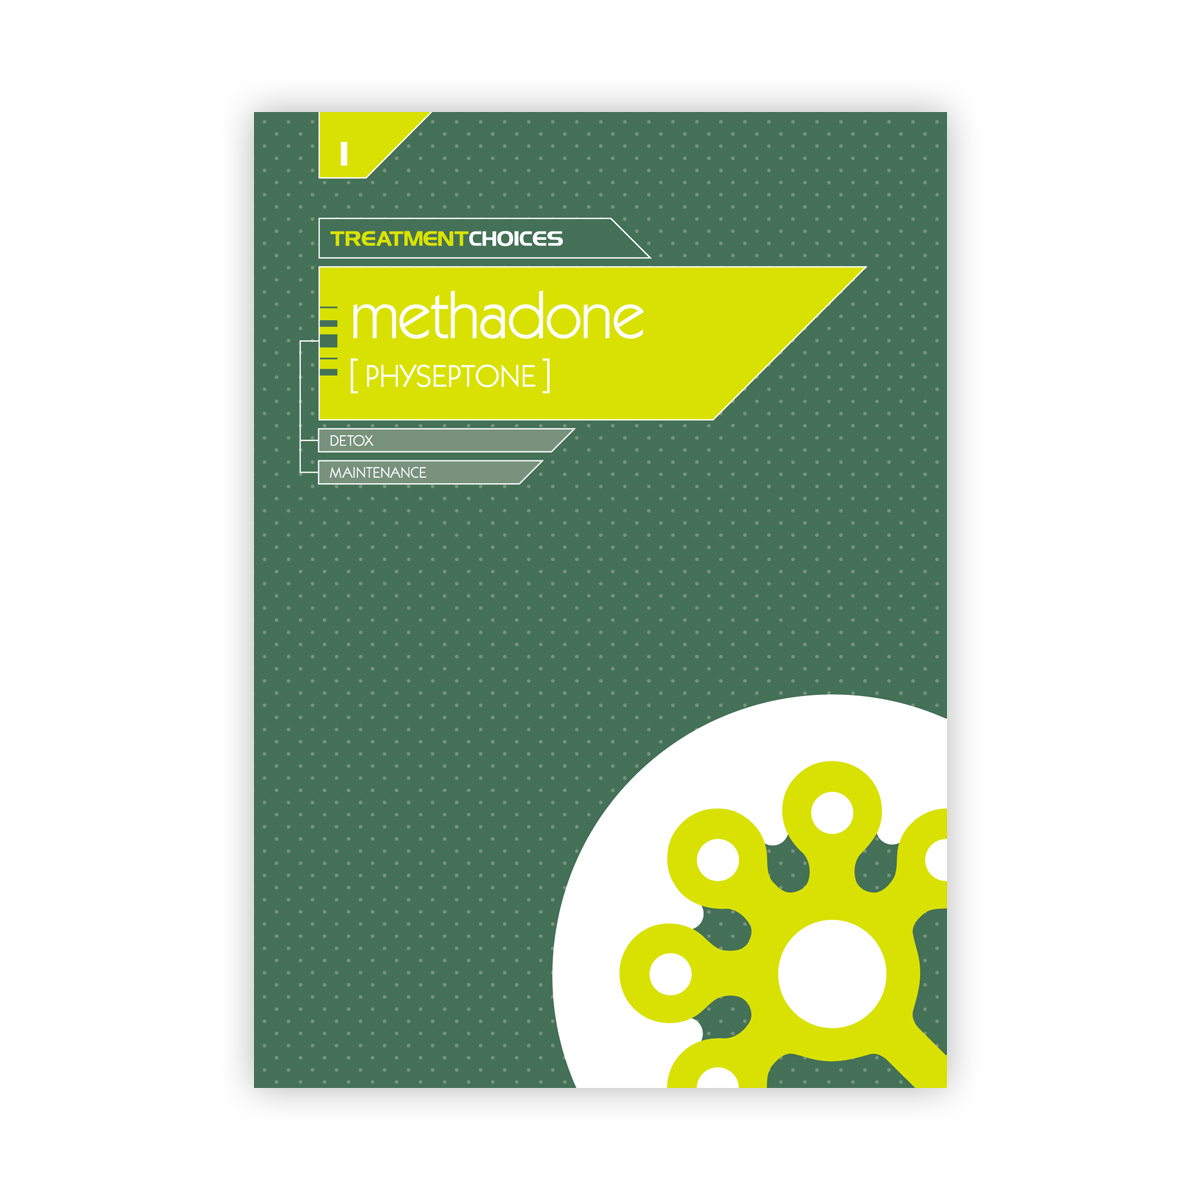 Treatment Choices 1: Methadone